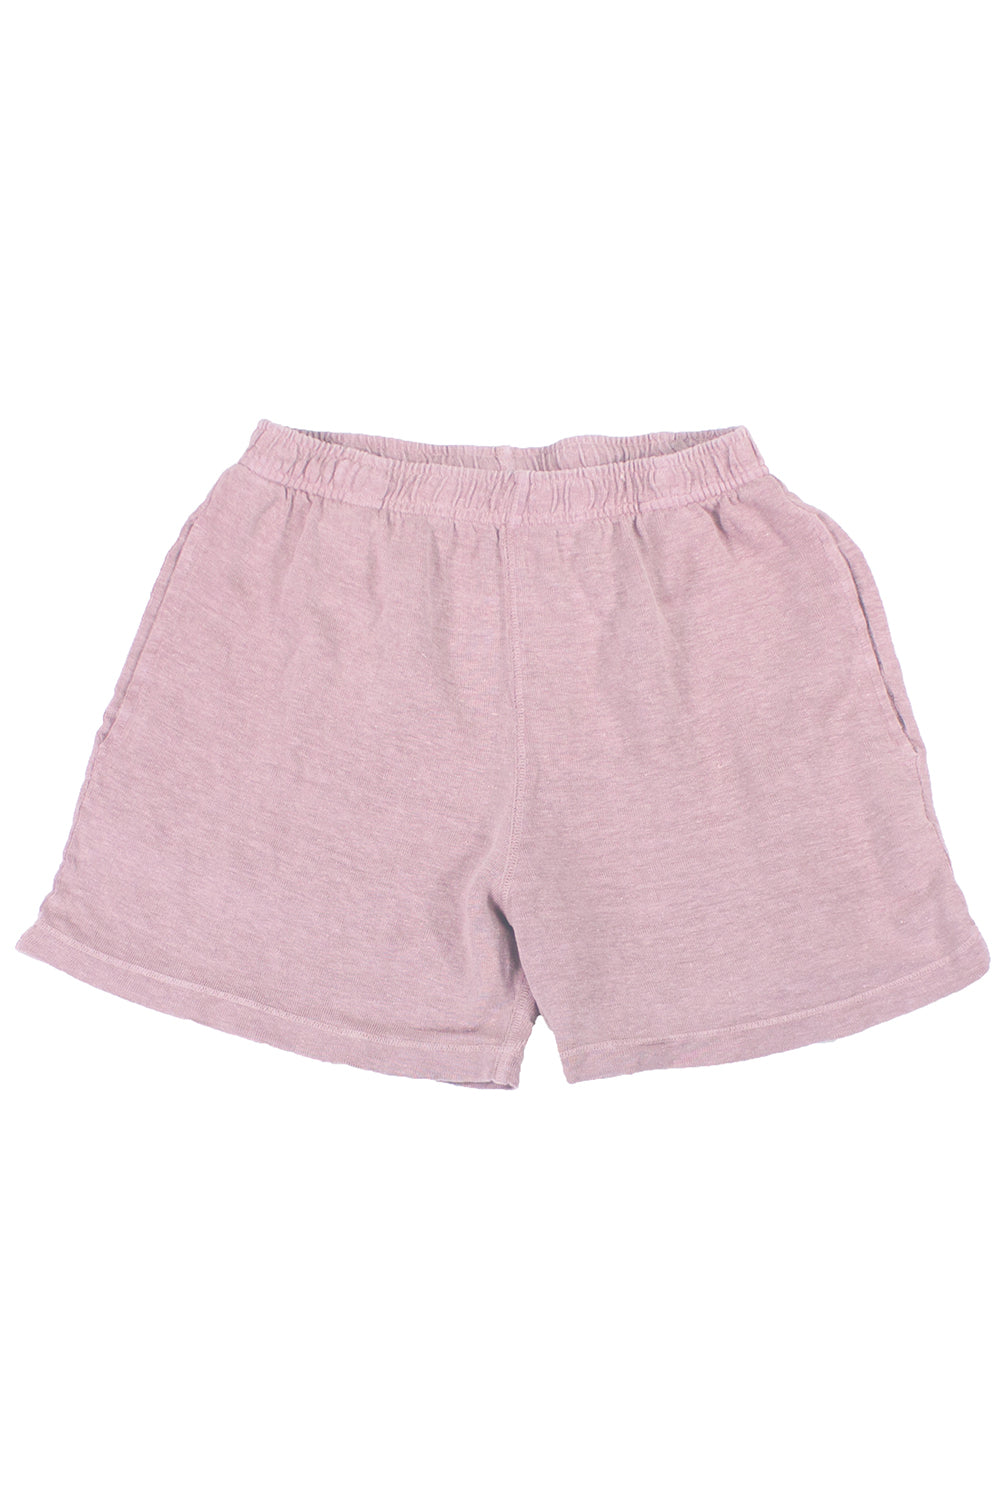 Kona 100% Hemp Short | Jungmaven Hemp Clothing & Accessories / Color: Rose Quartz